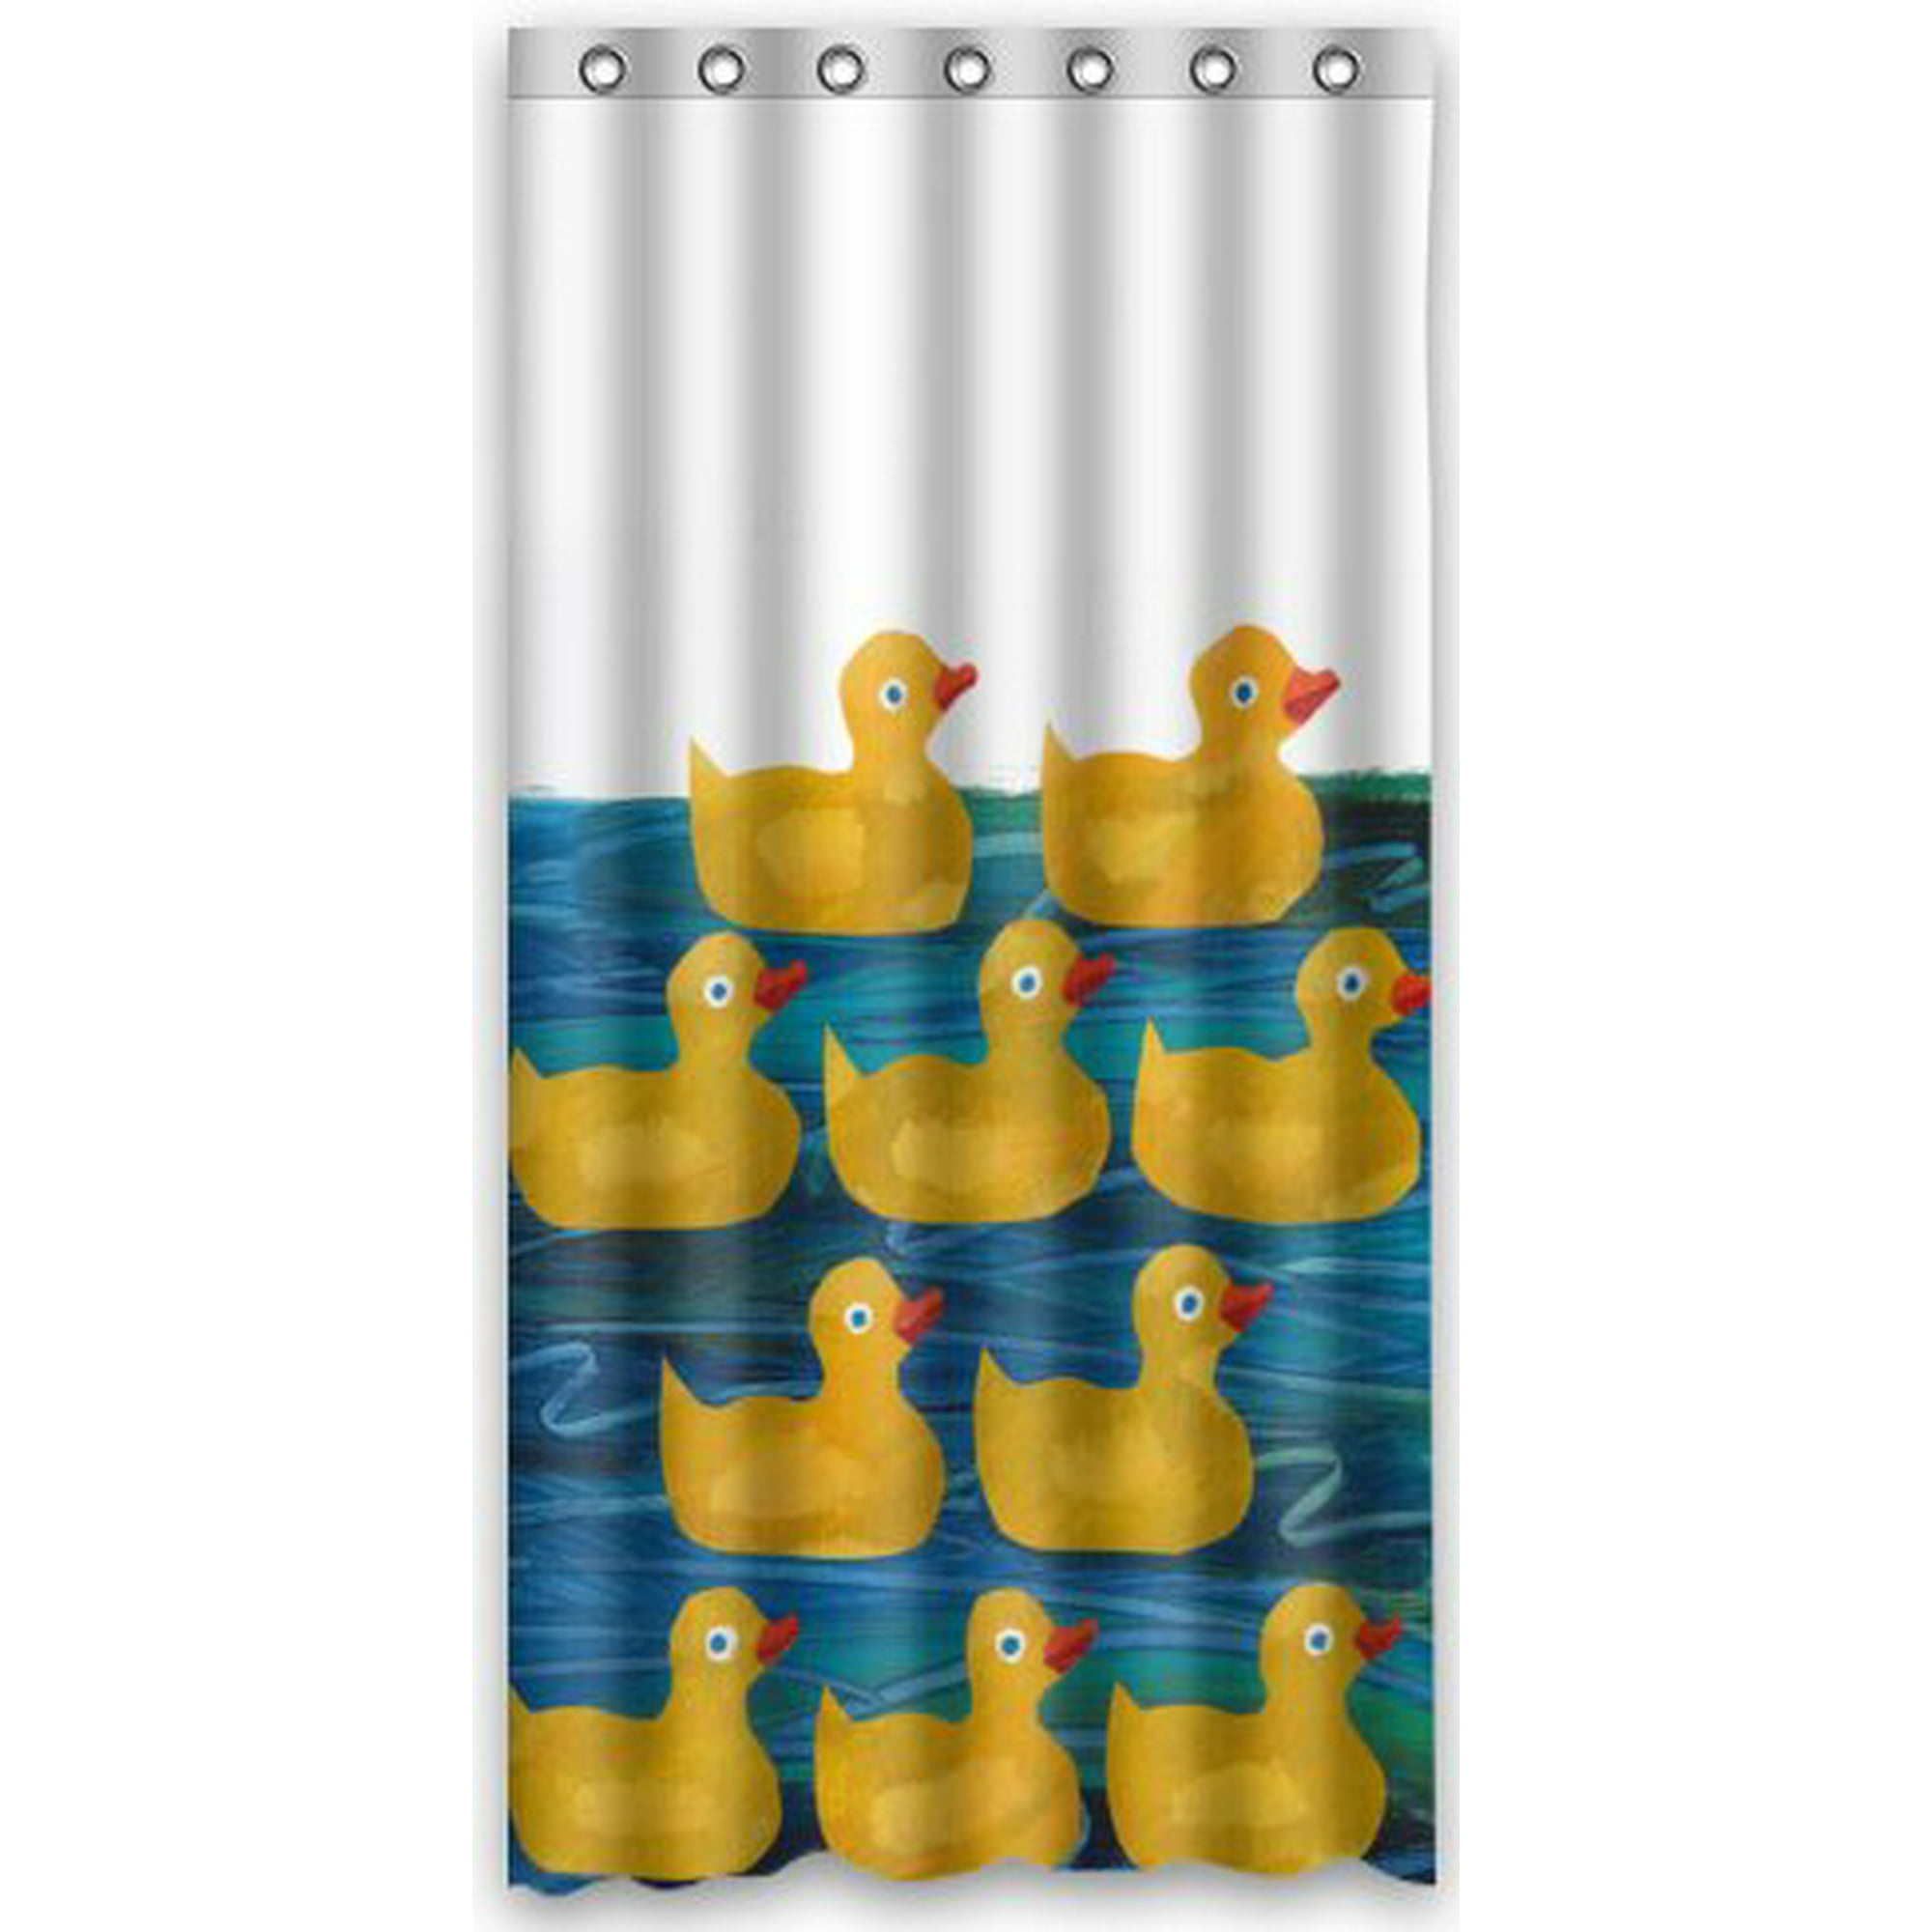 Xddja Yellow Rubber Duck Shower Curtain, Rubber Duck Shower Curtain Fabric